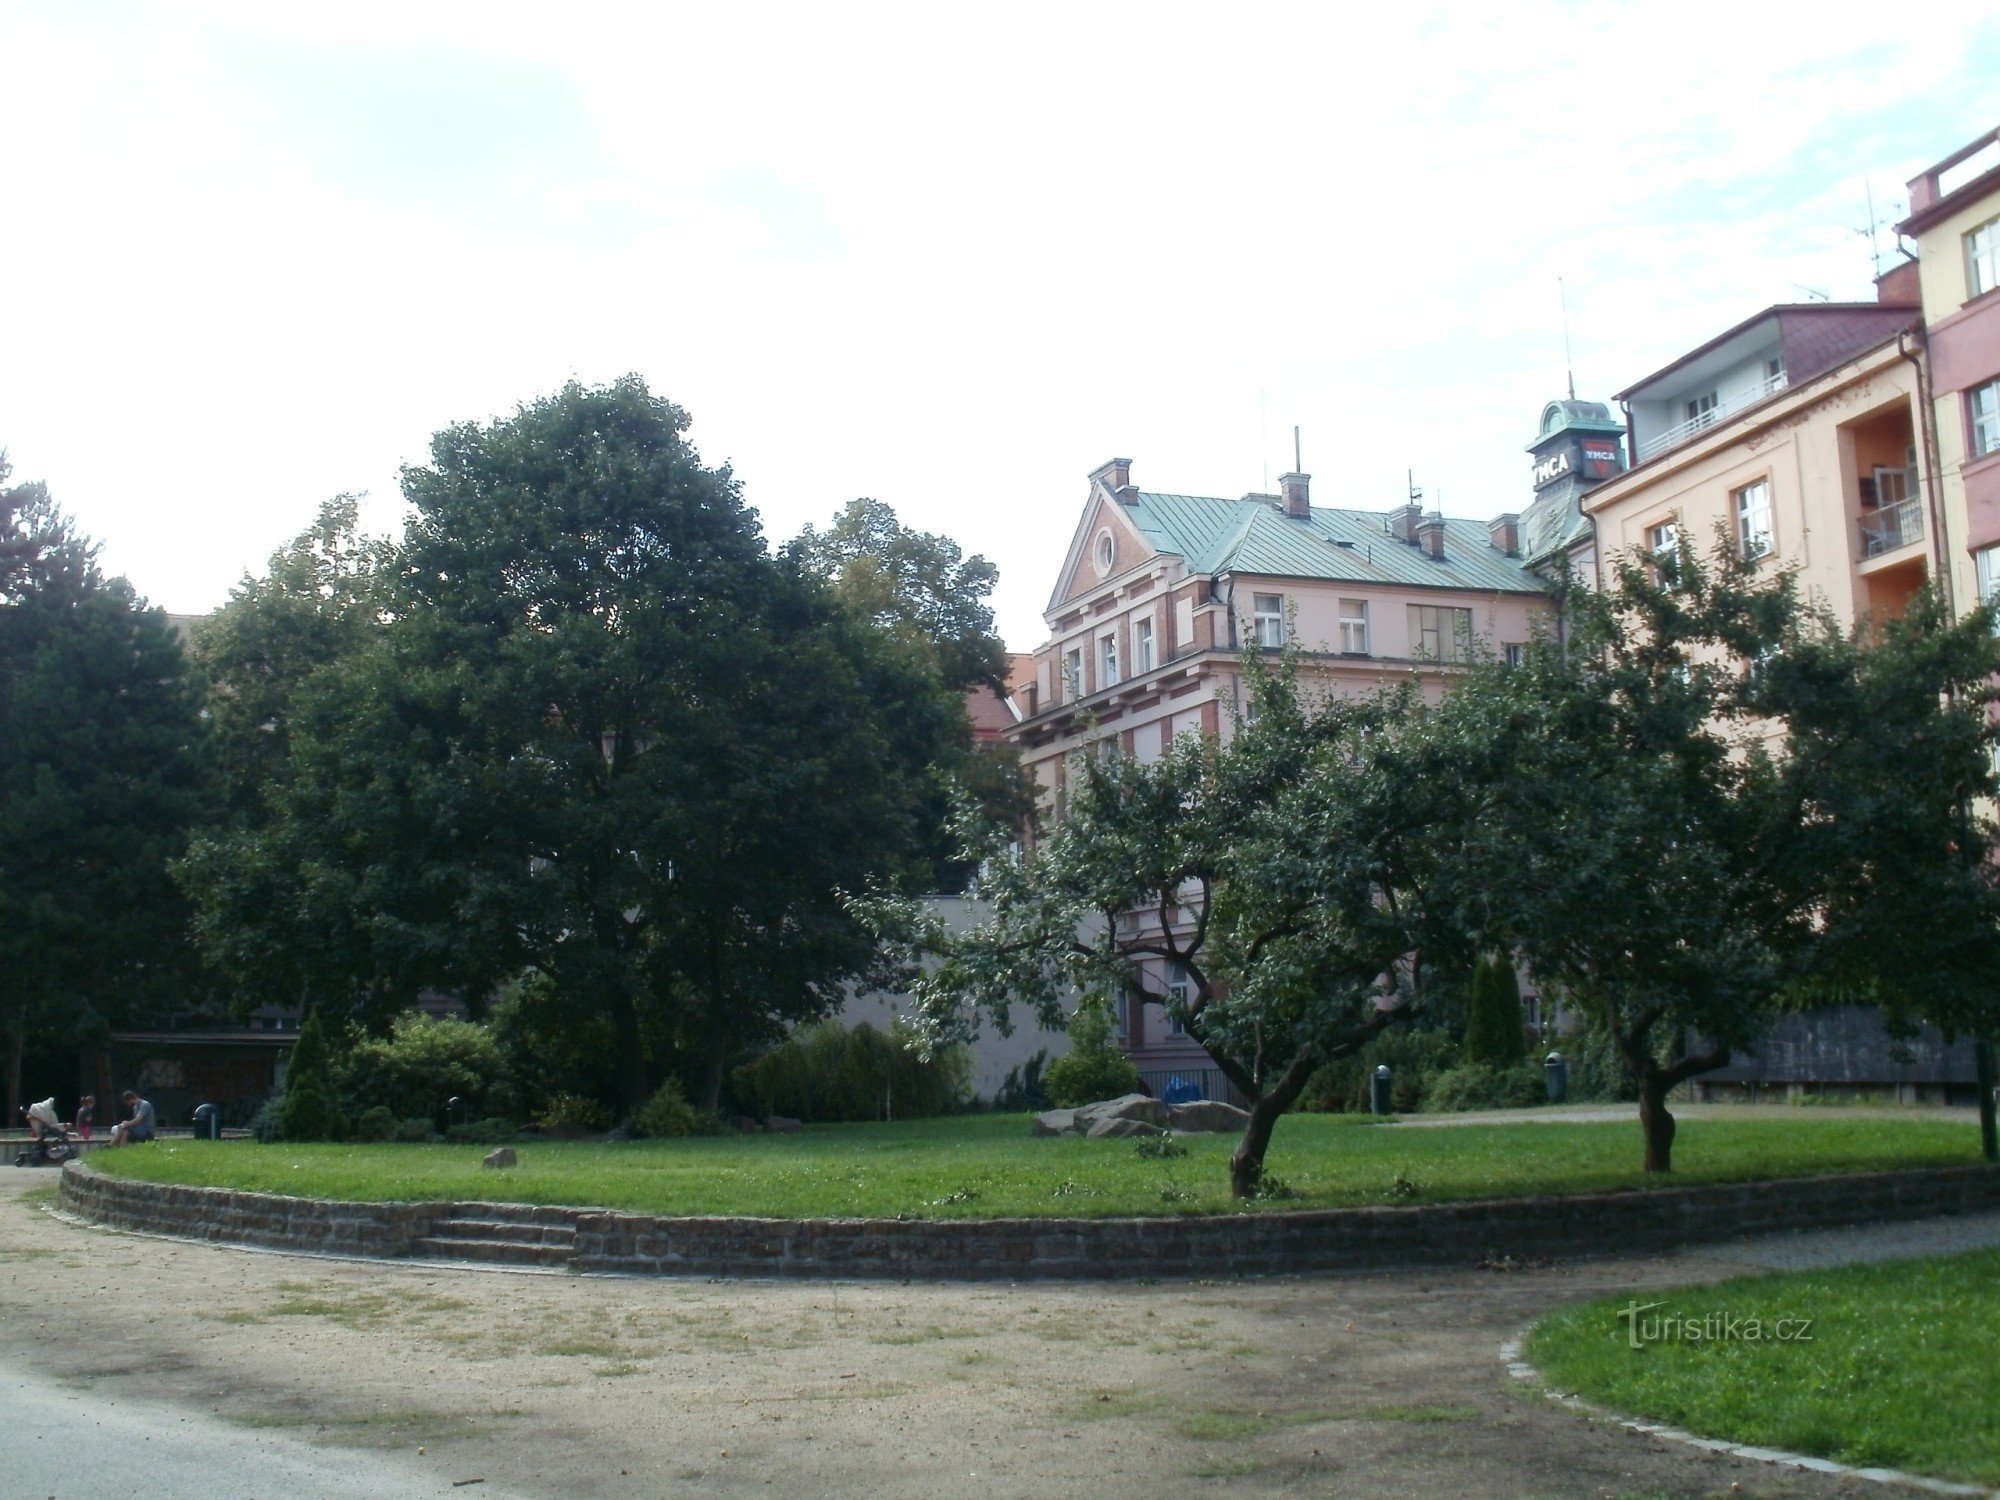 Hradec Králové - parc de basme